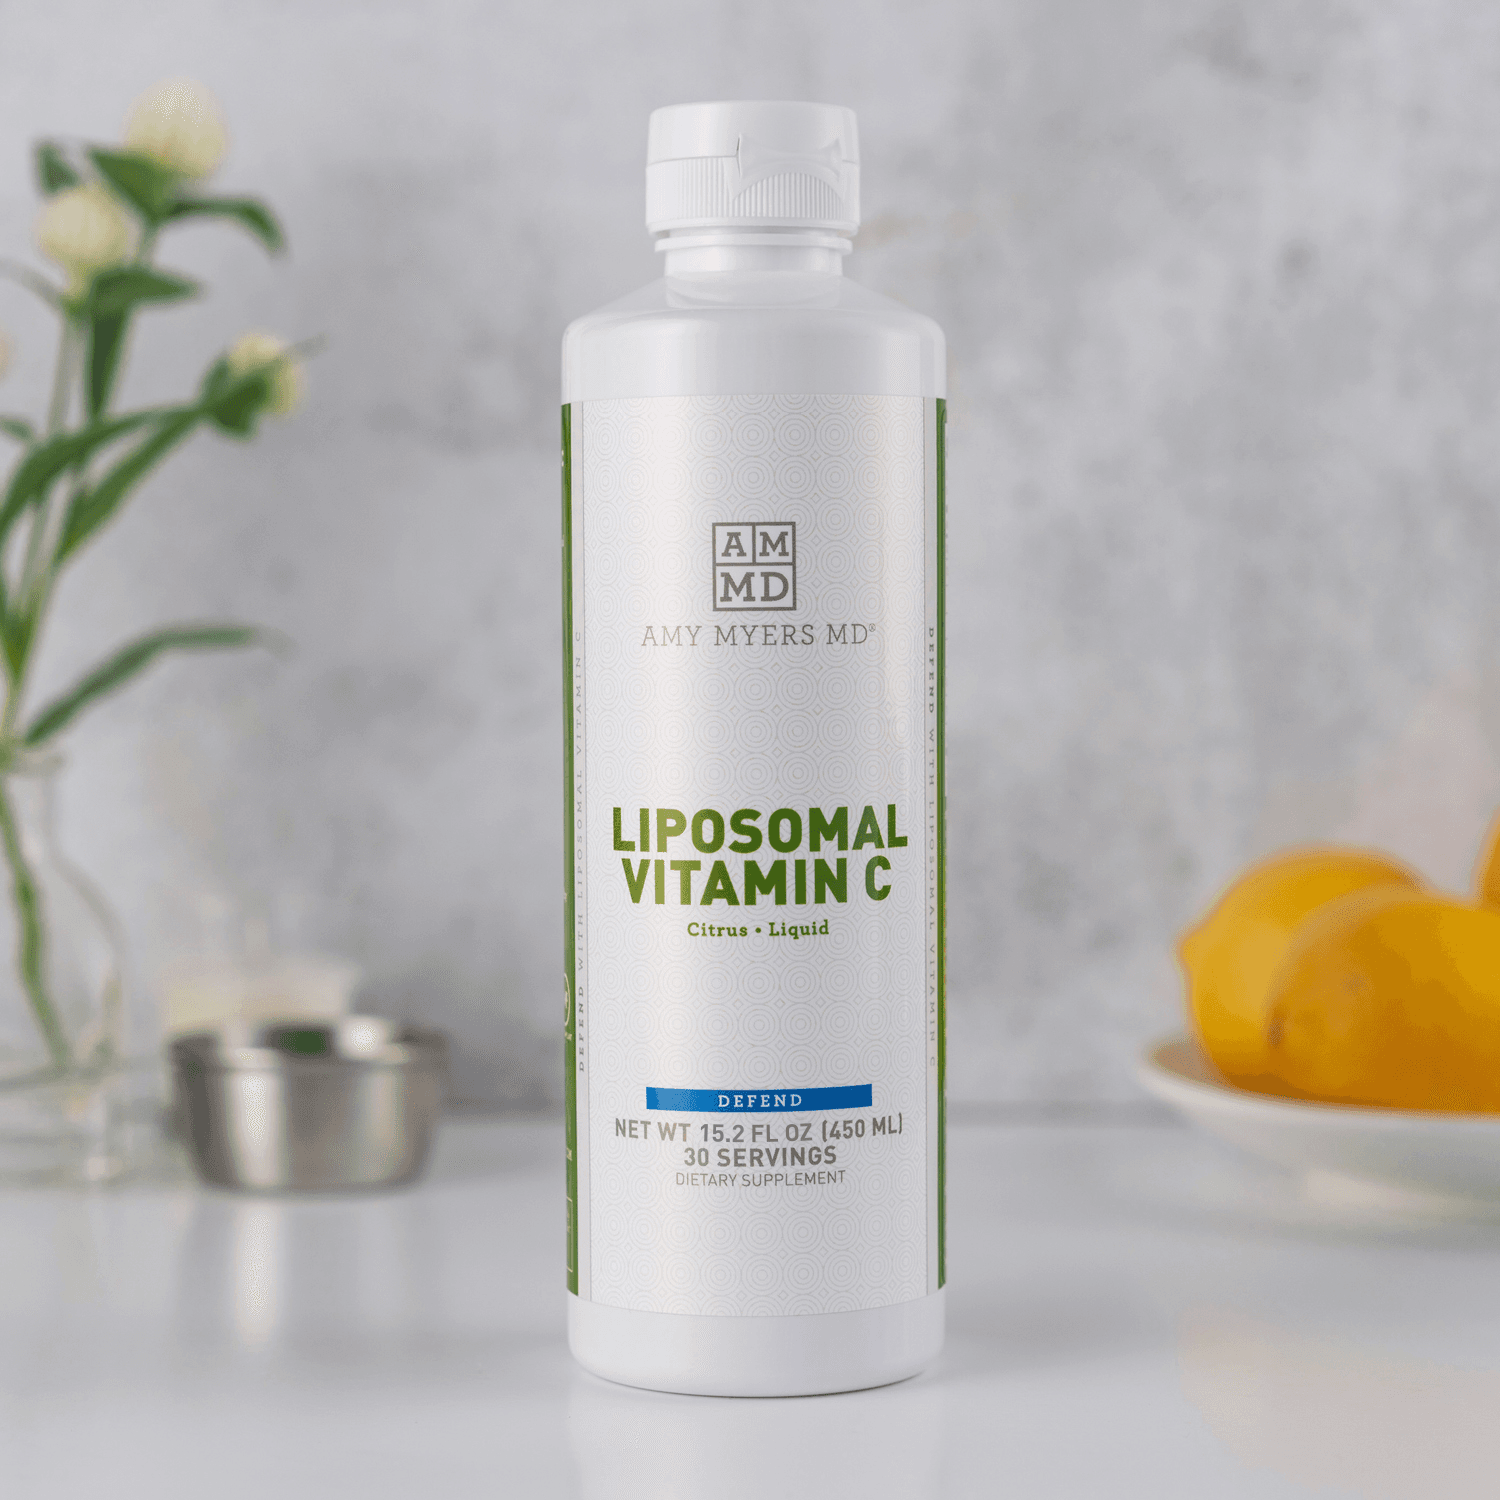 A bottle of Liposomal Vitamin C - Front Image - Amy Myers MD®